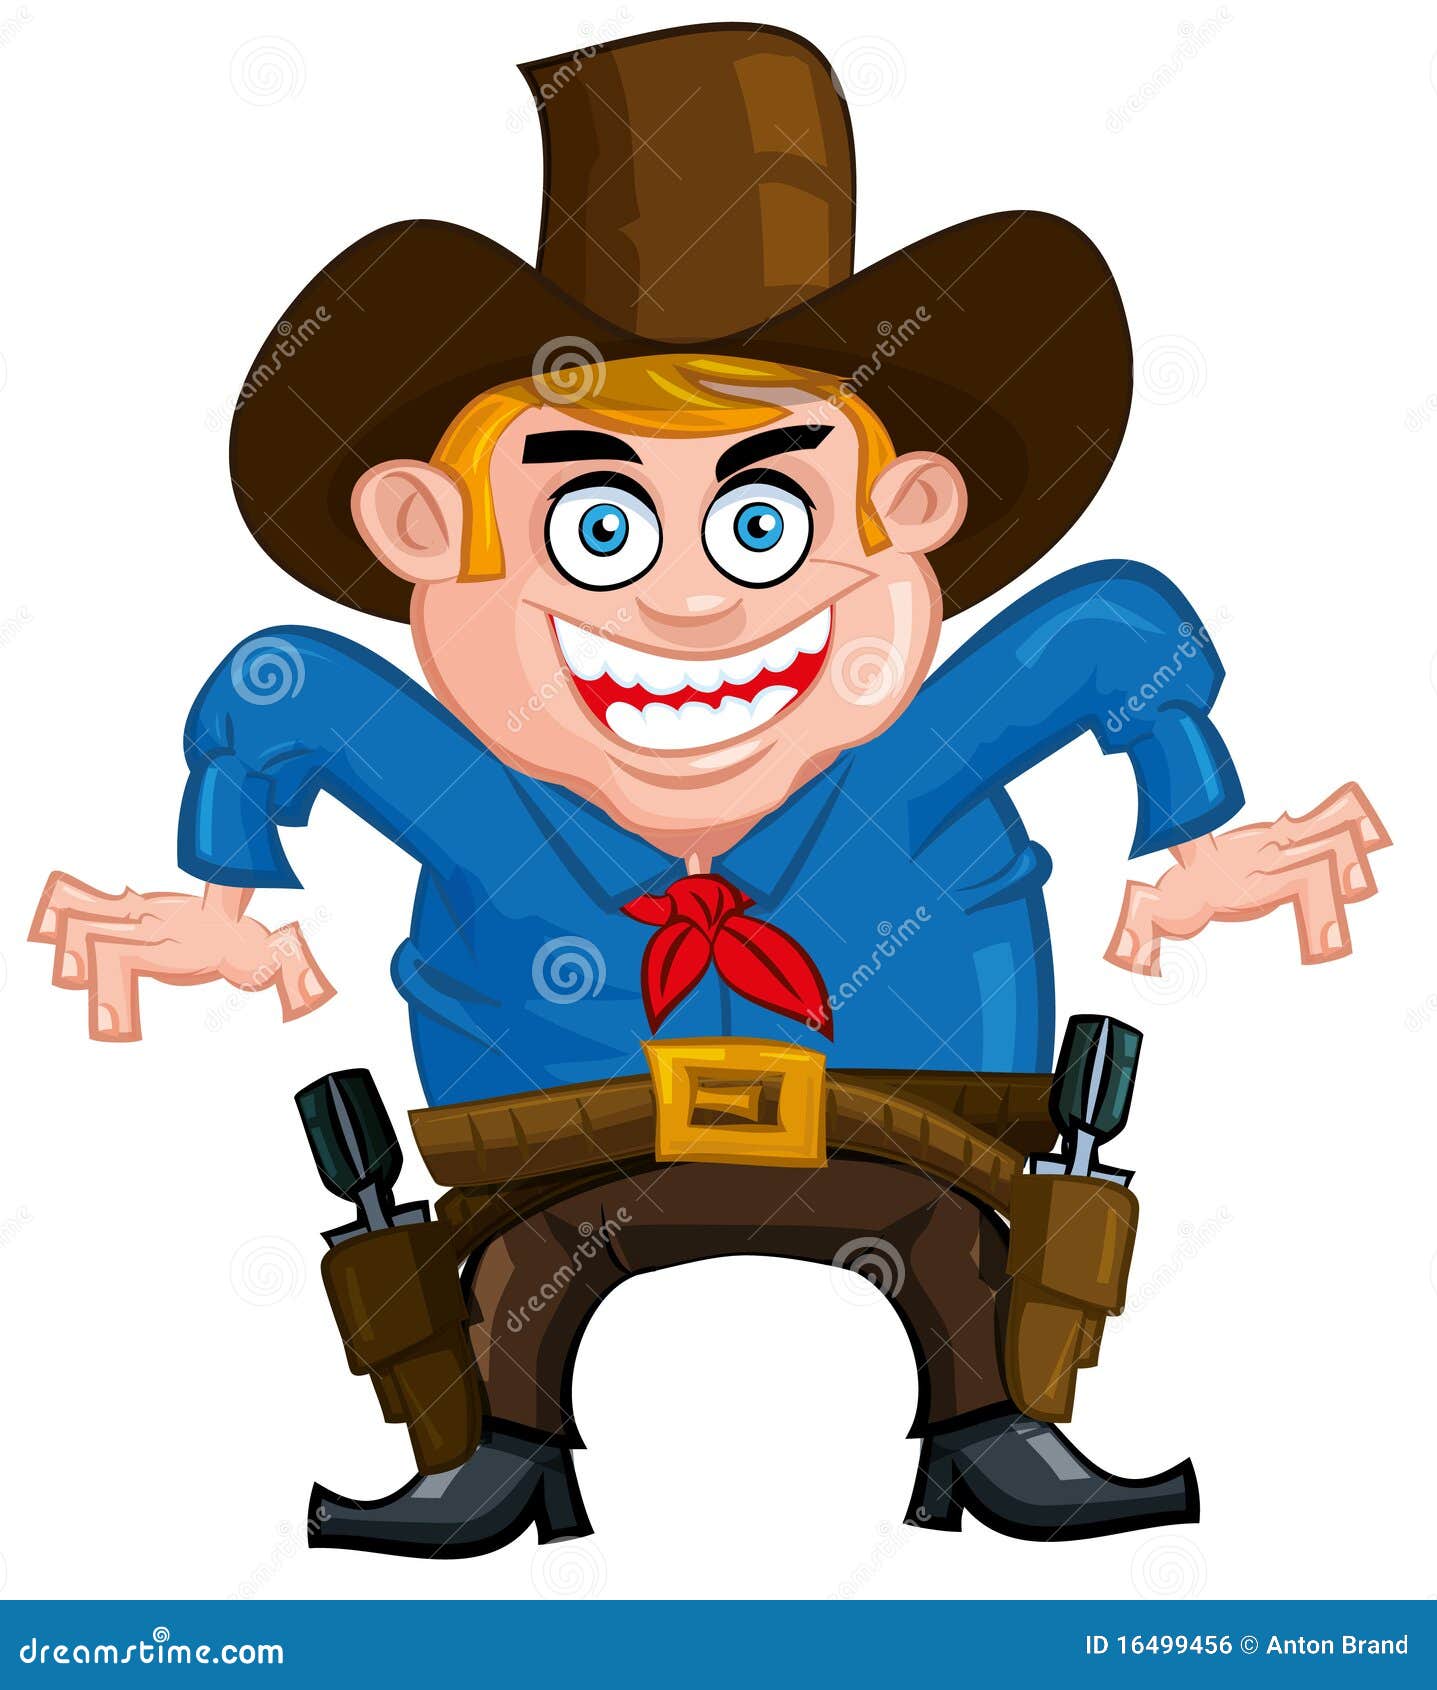 Cartoon cowboy stock vector. Illustration of cartoon - 16499456